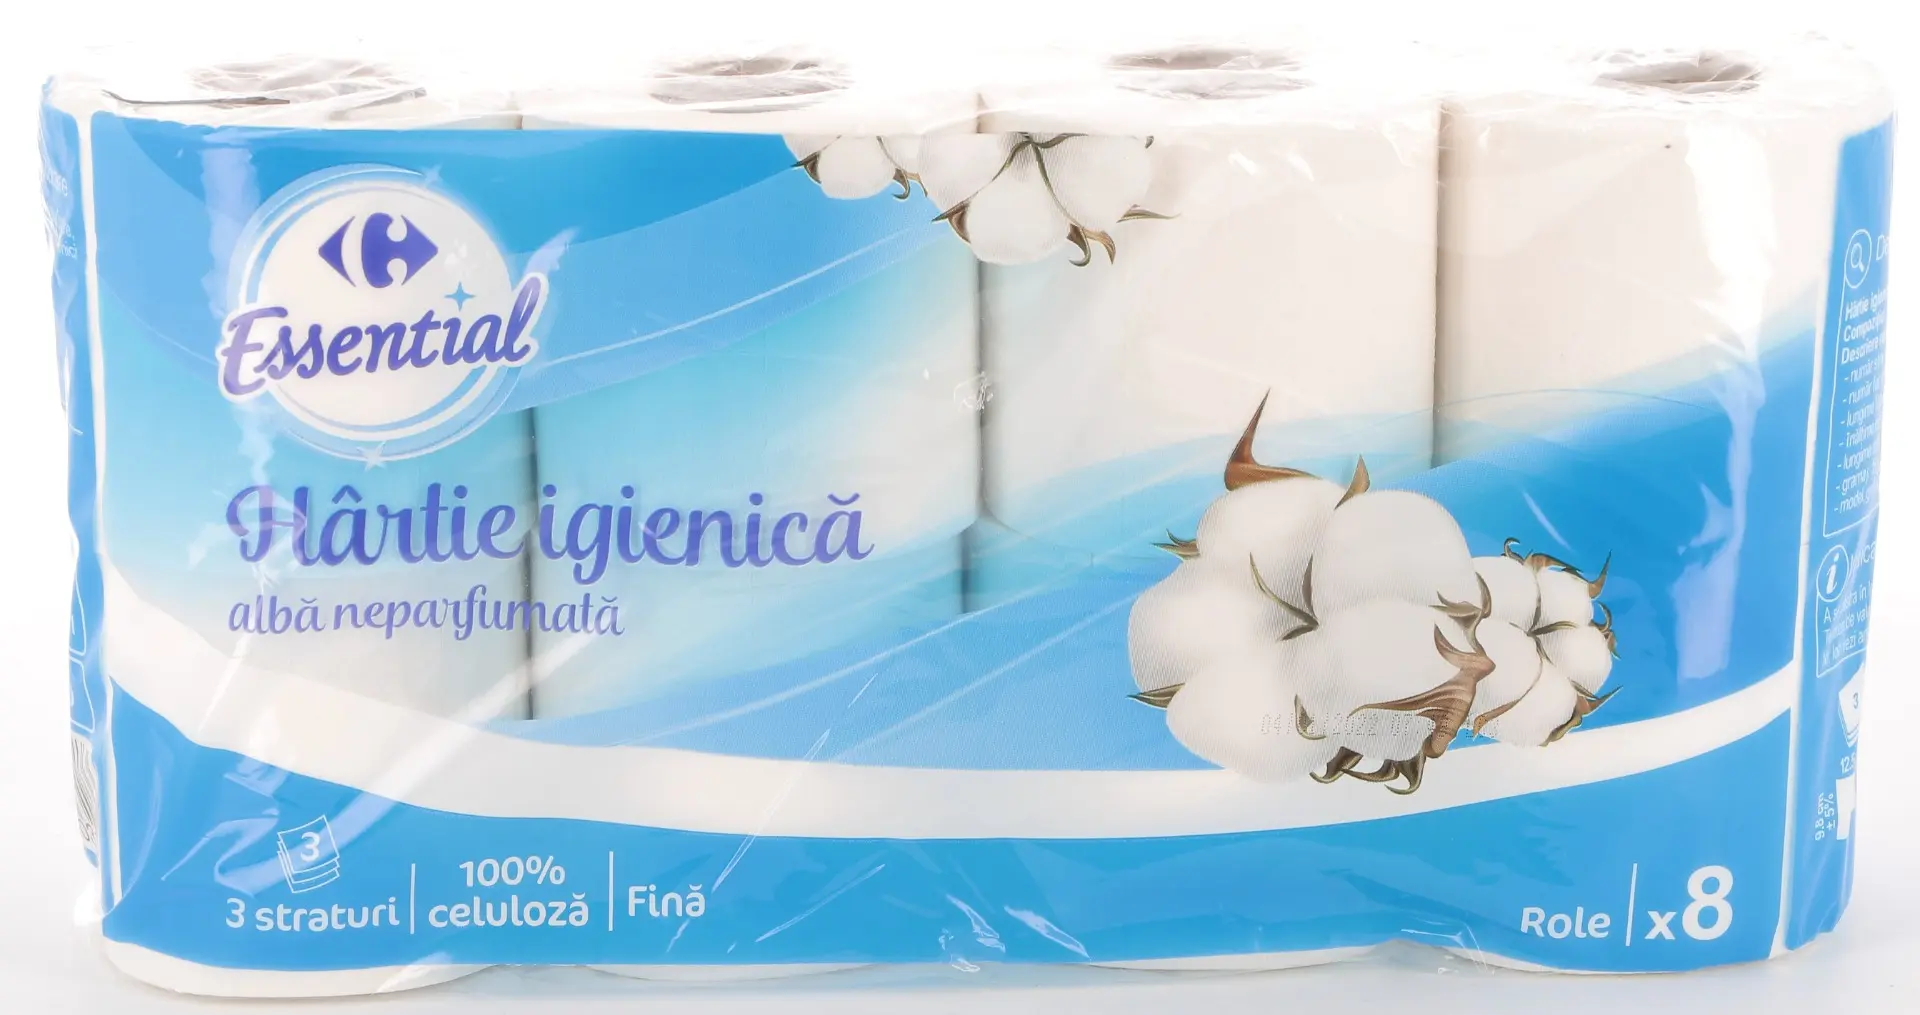 Hartie igienica alba neparfumata Carrefour Essential 3 straturi 8 role